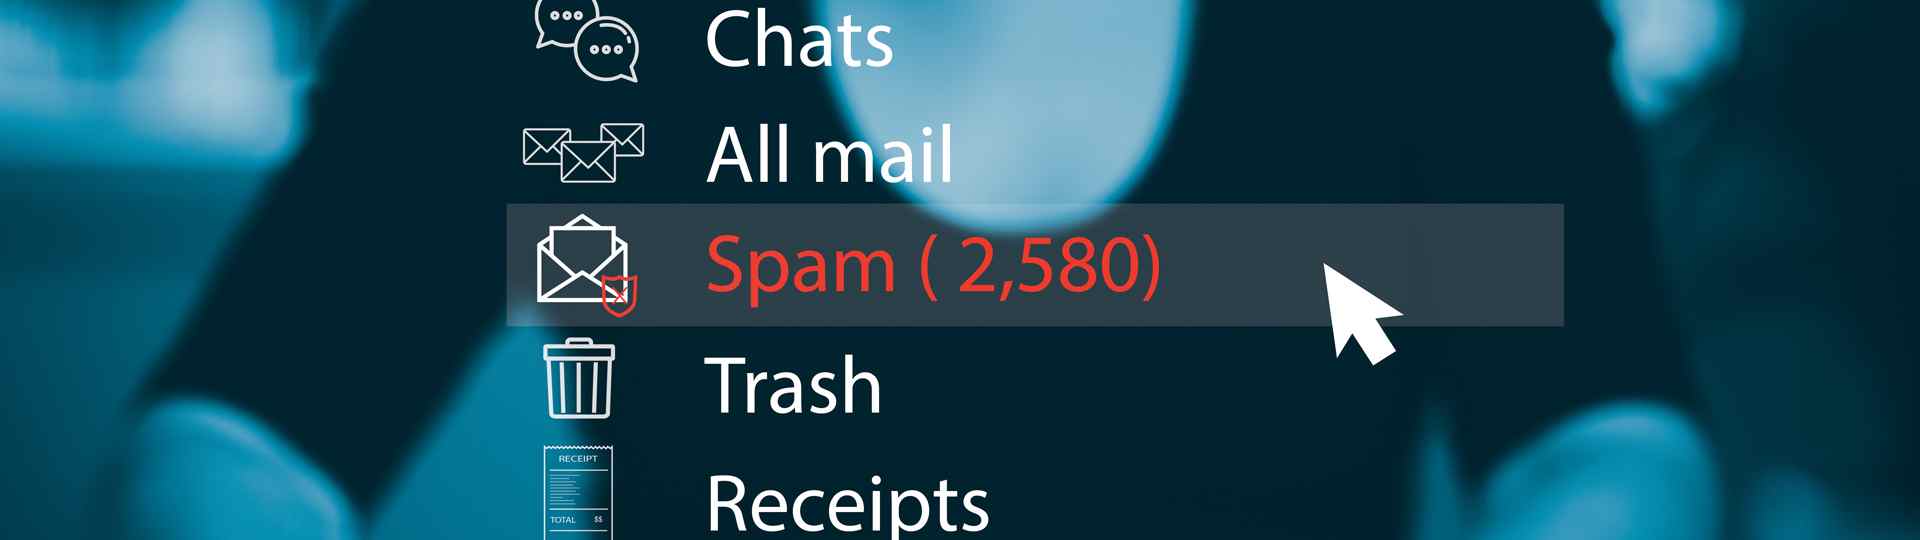 Spam inbox